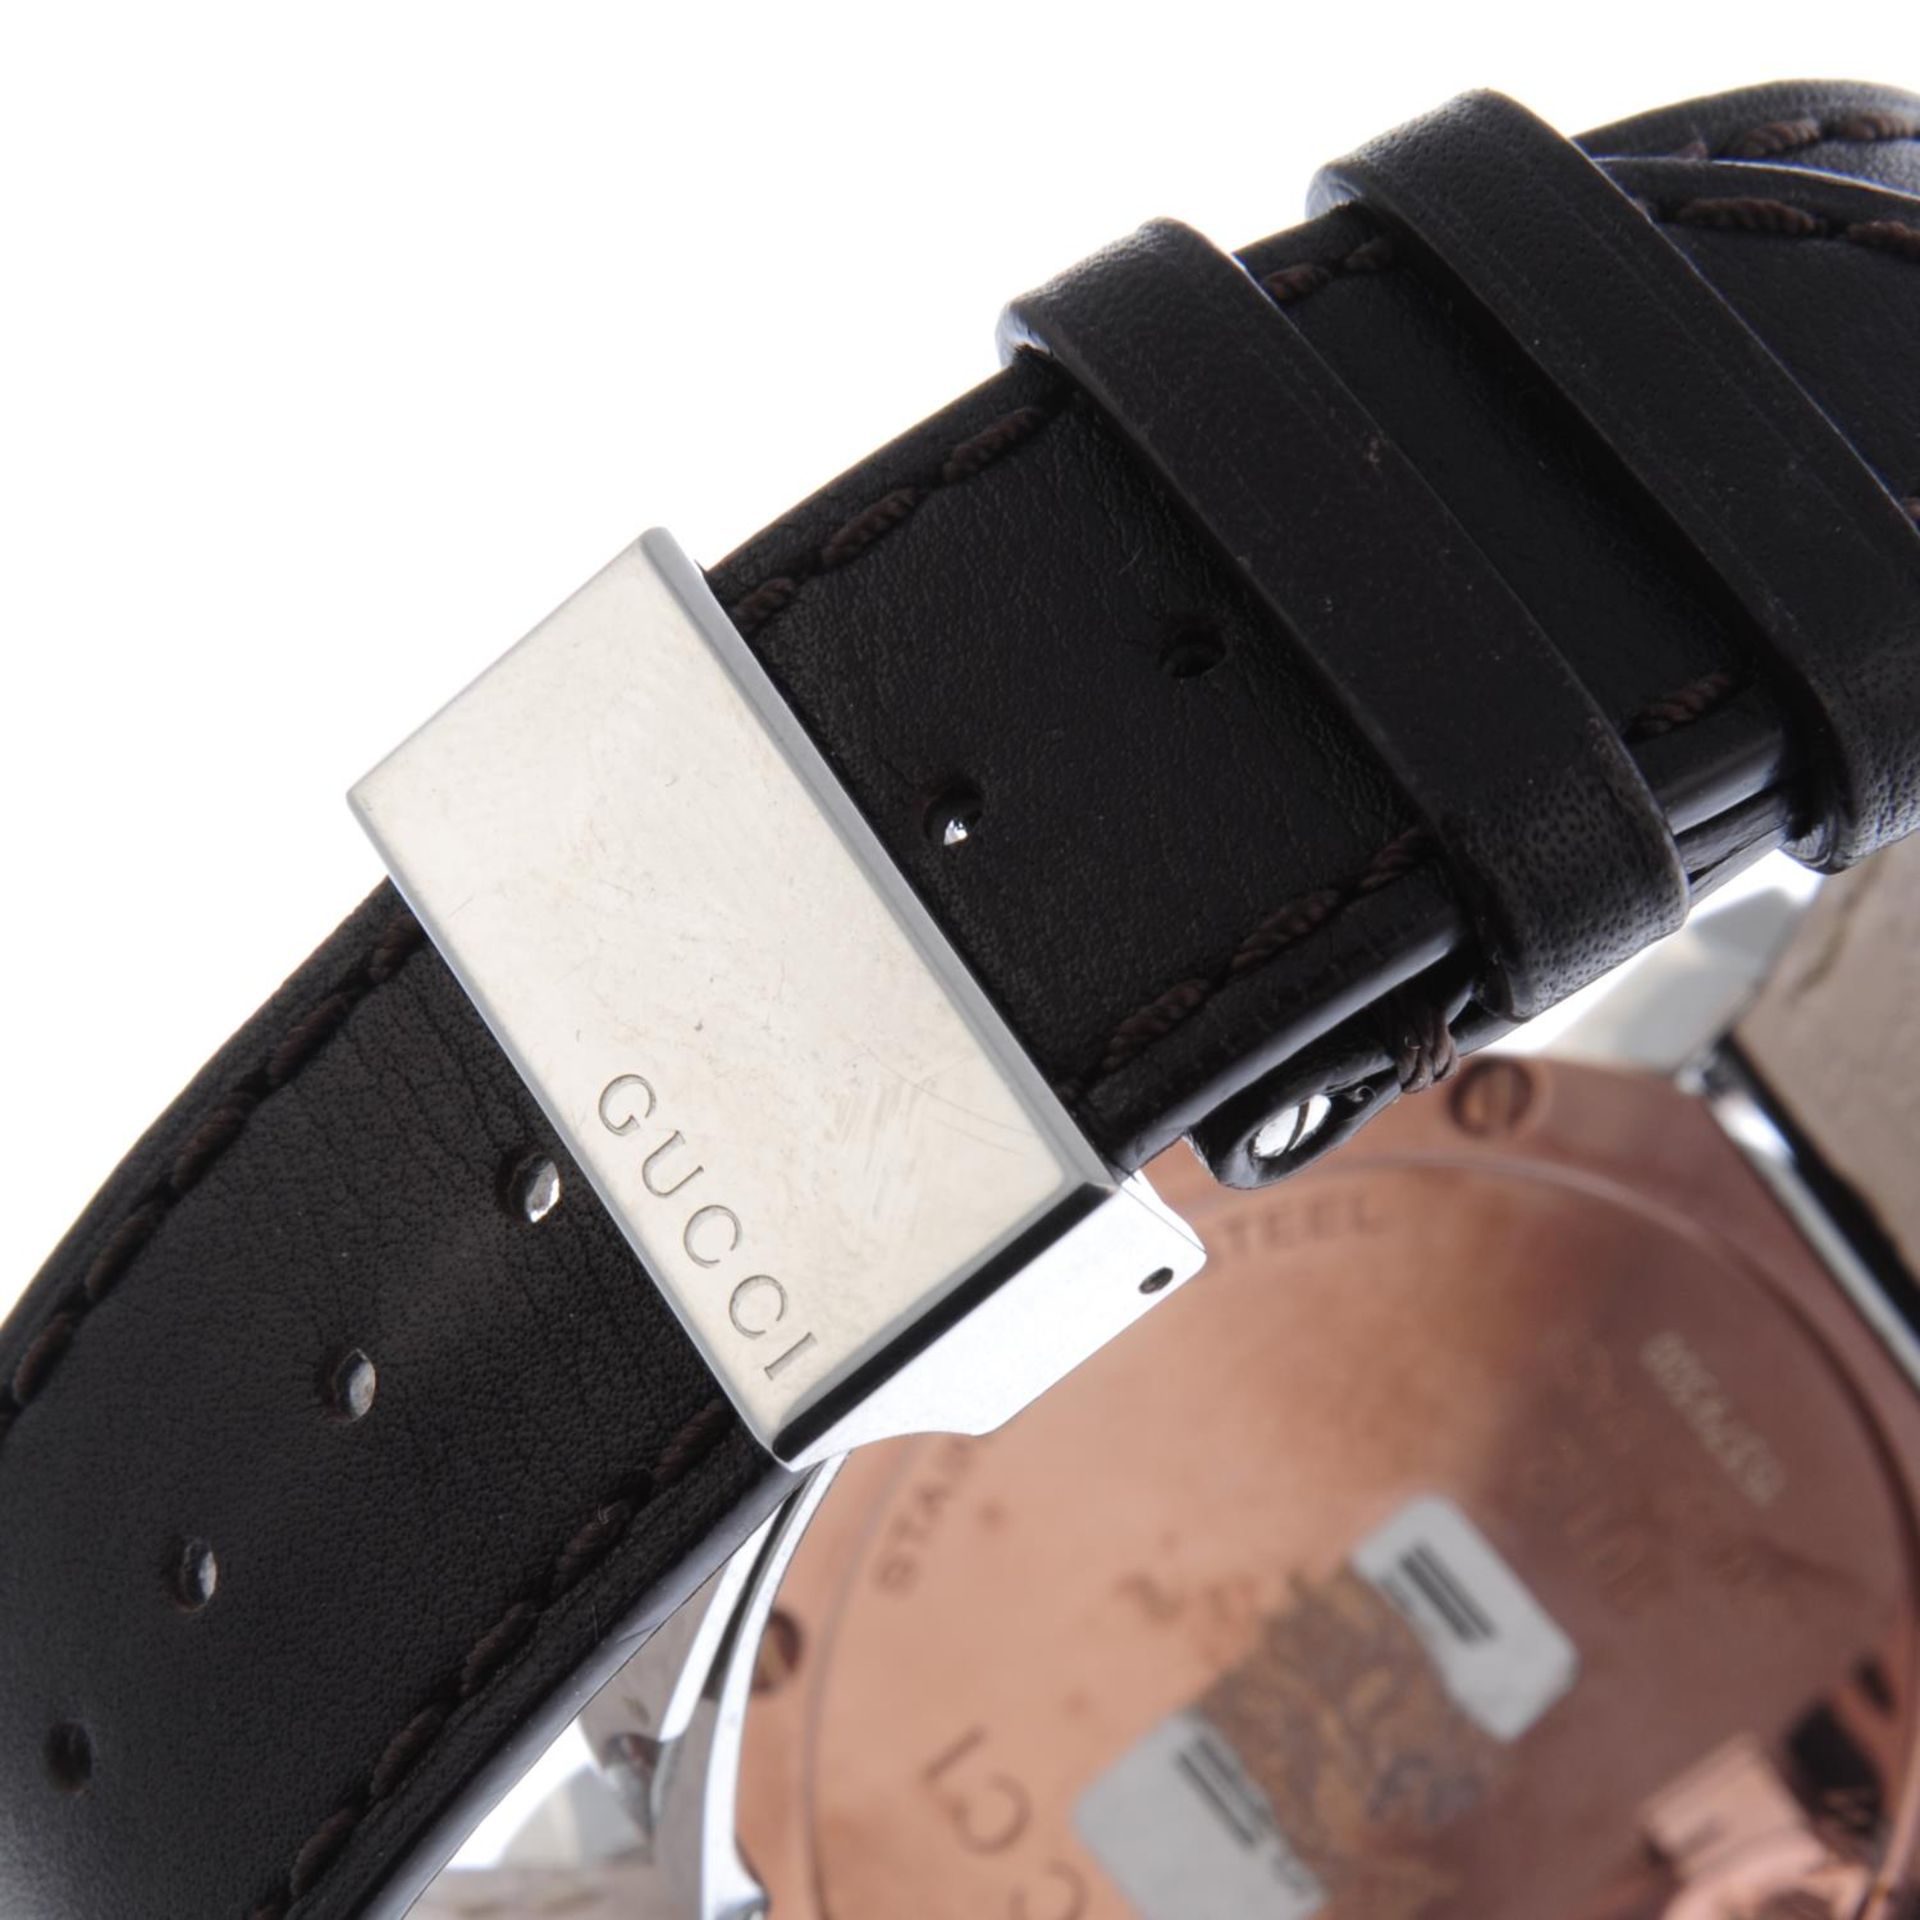 GUCCI - a gentleman's G-Chrono chronograph wrist watch. - Image 2 of 4